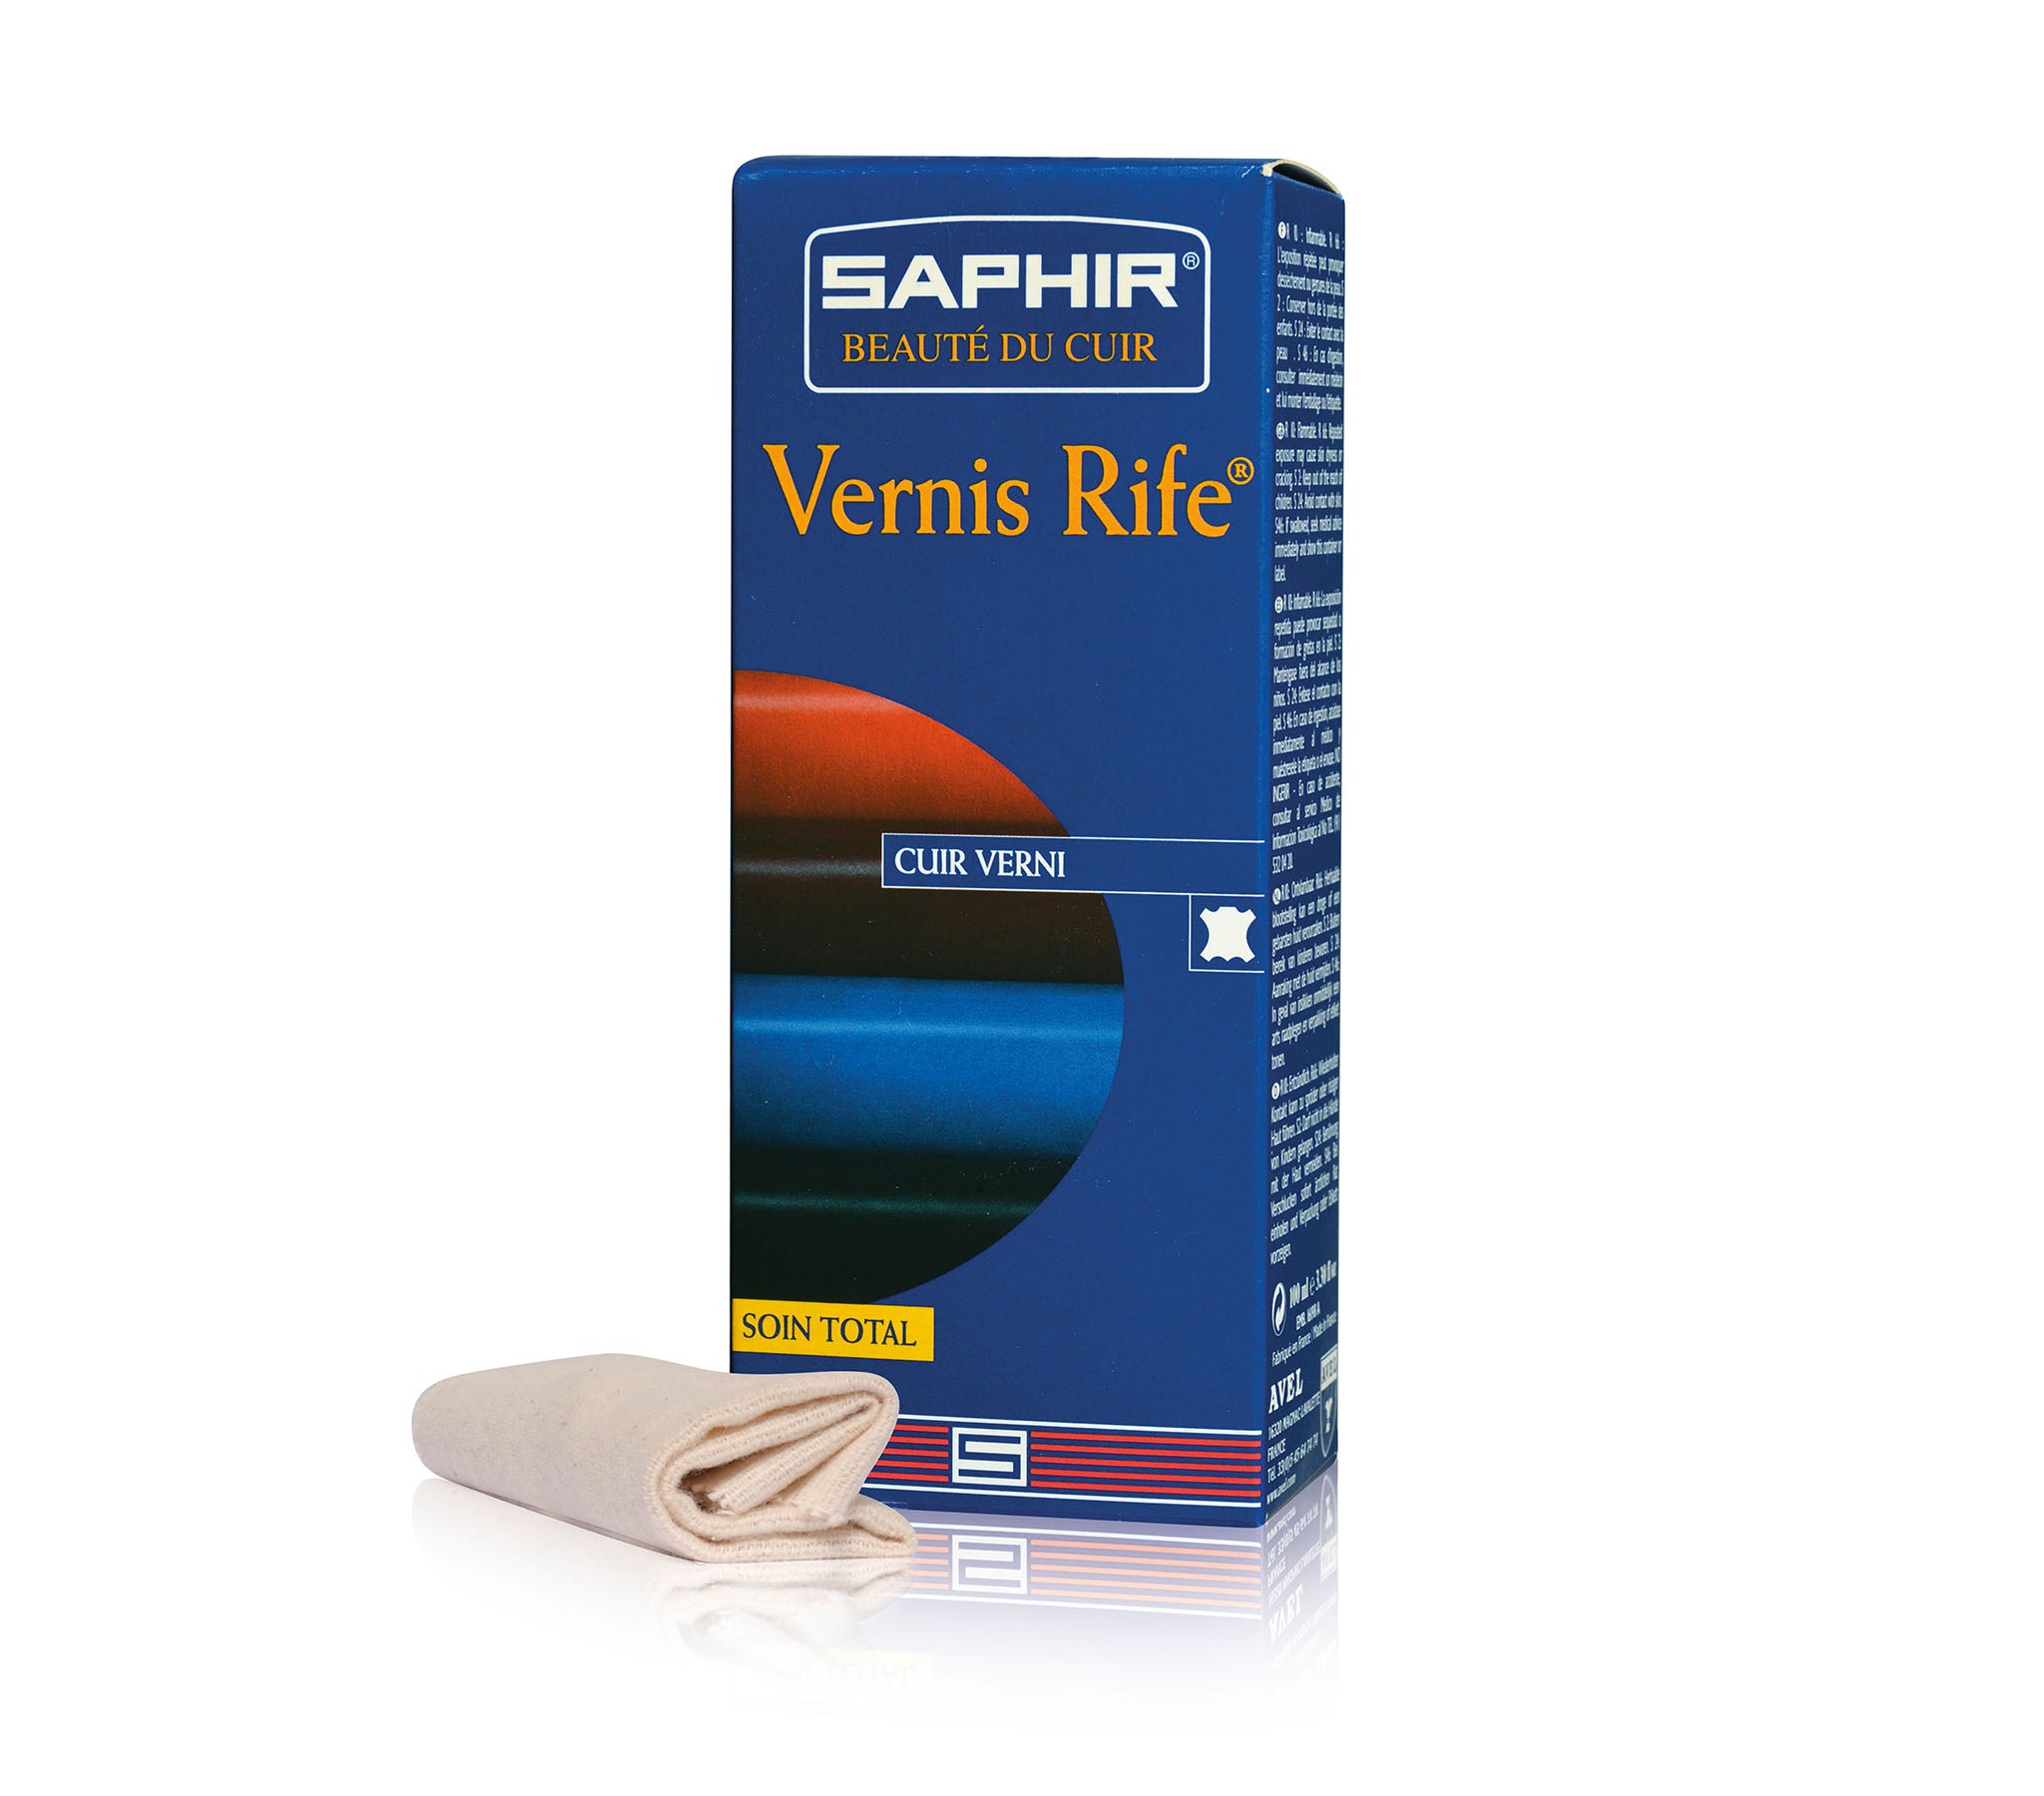 SAPHIR Vernis Rife Patent Leather Cleaner 100ml